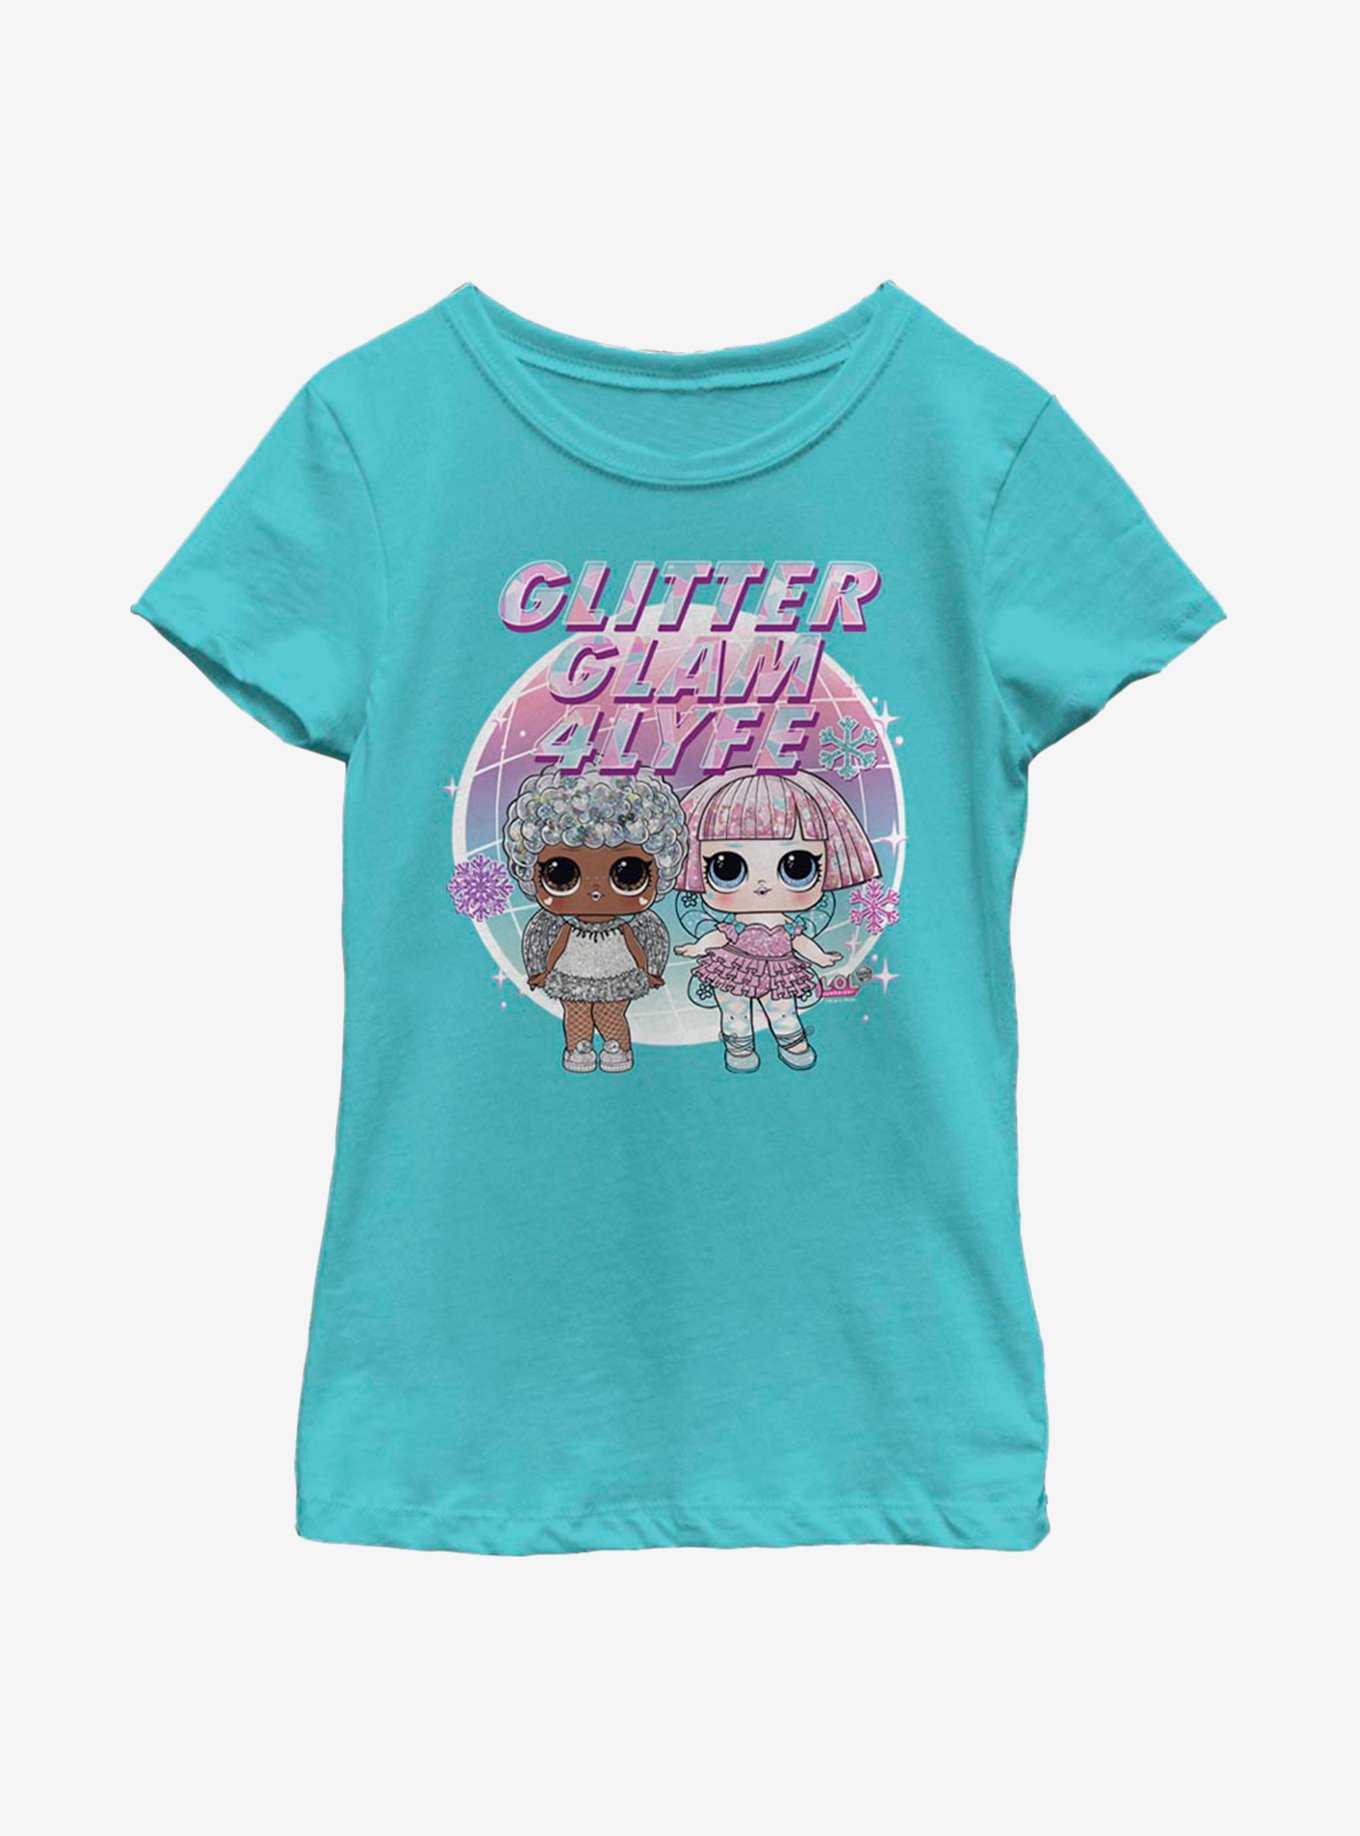 L.O.L. Surprise! Glitter Glam Youth Girls T-Shirt, , hi-res